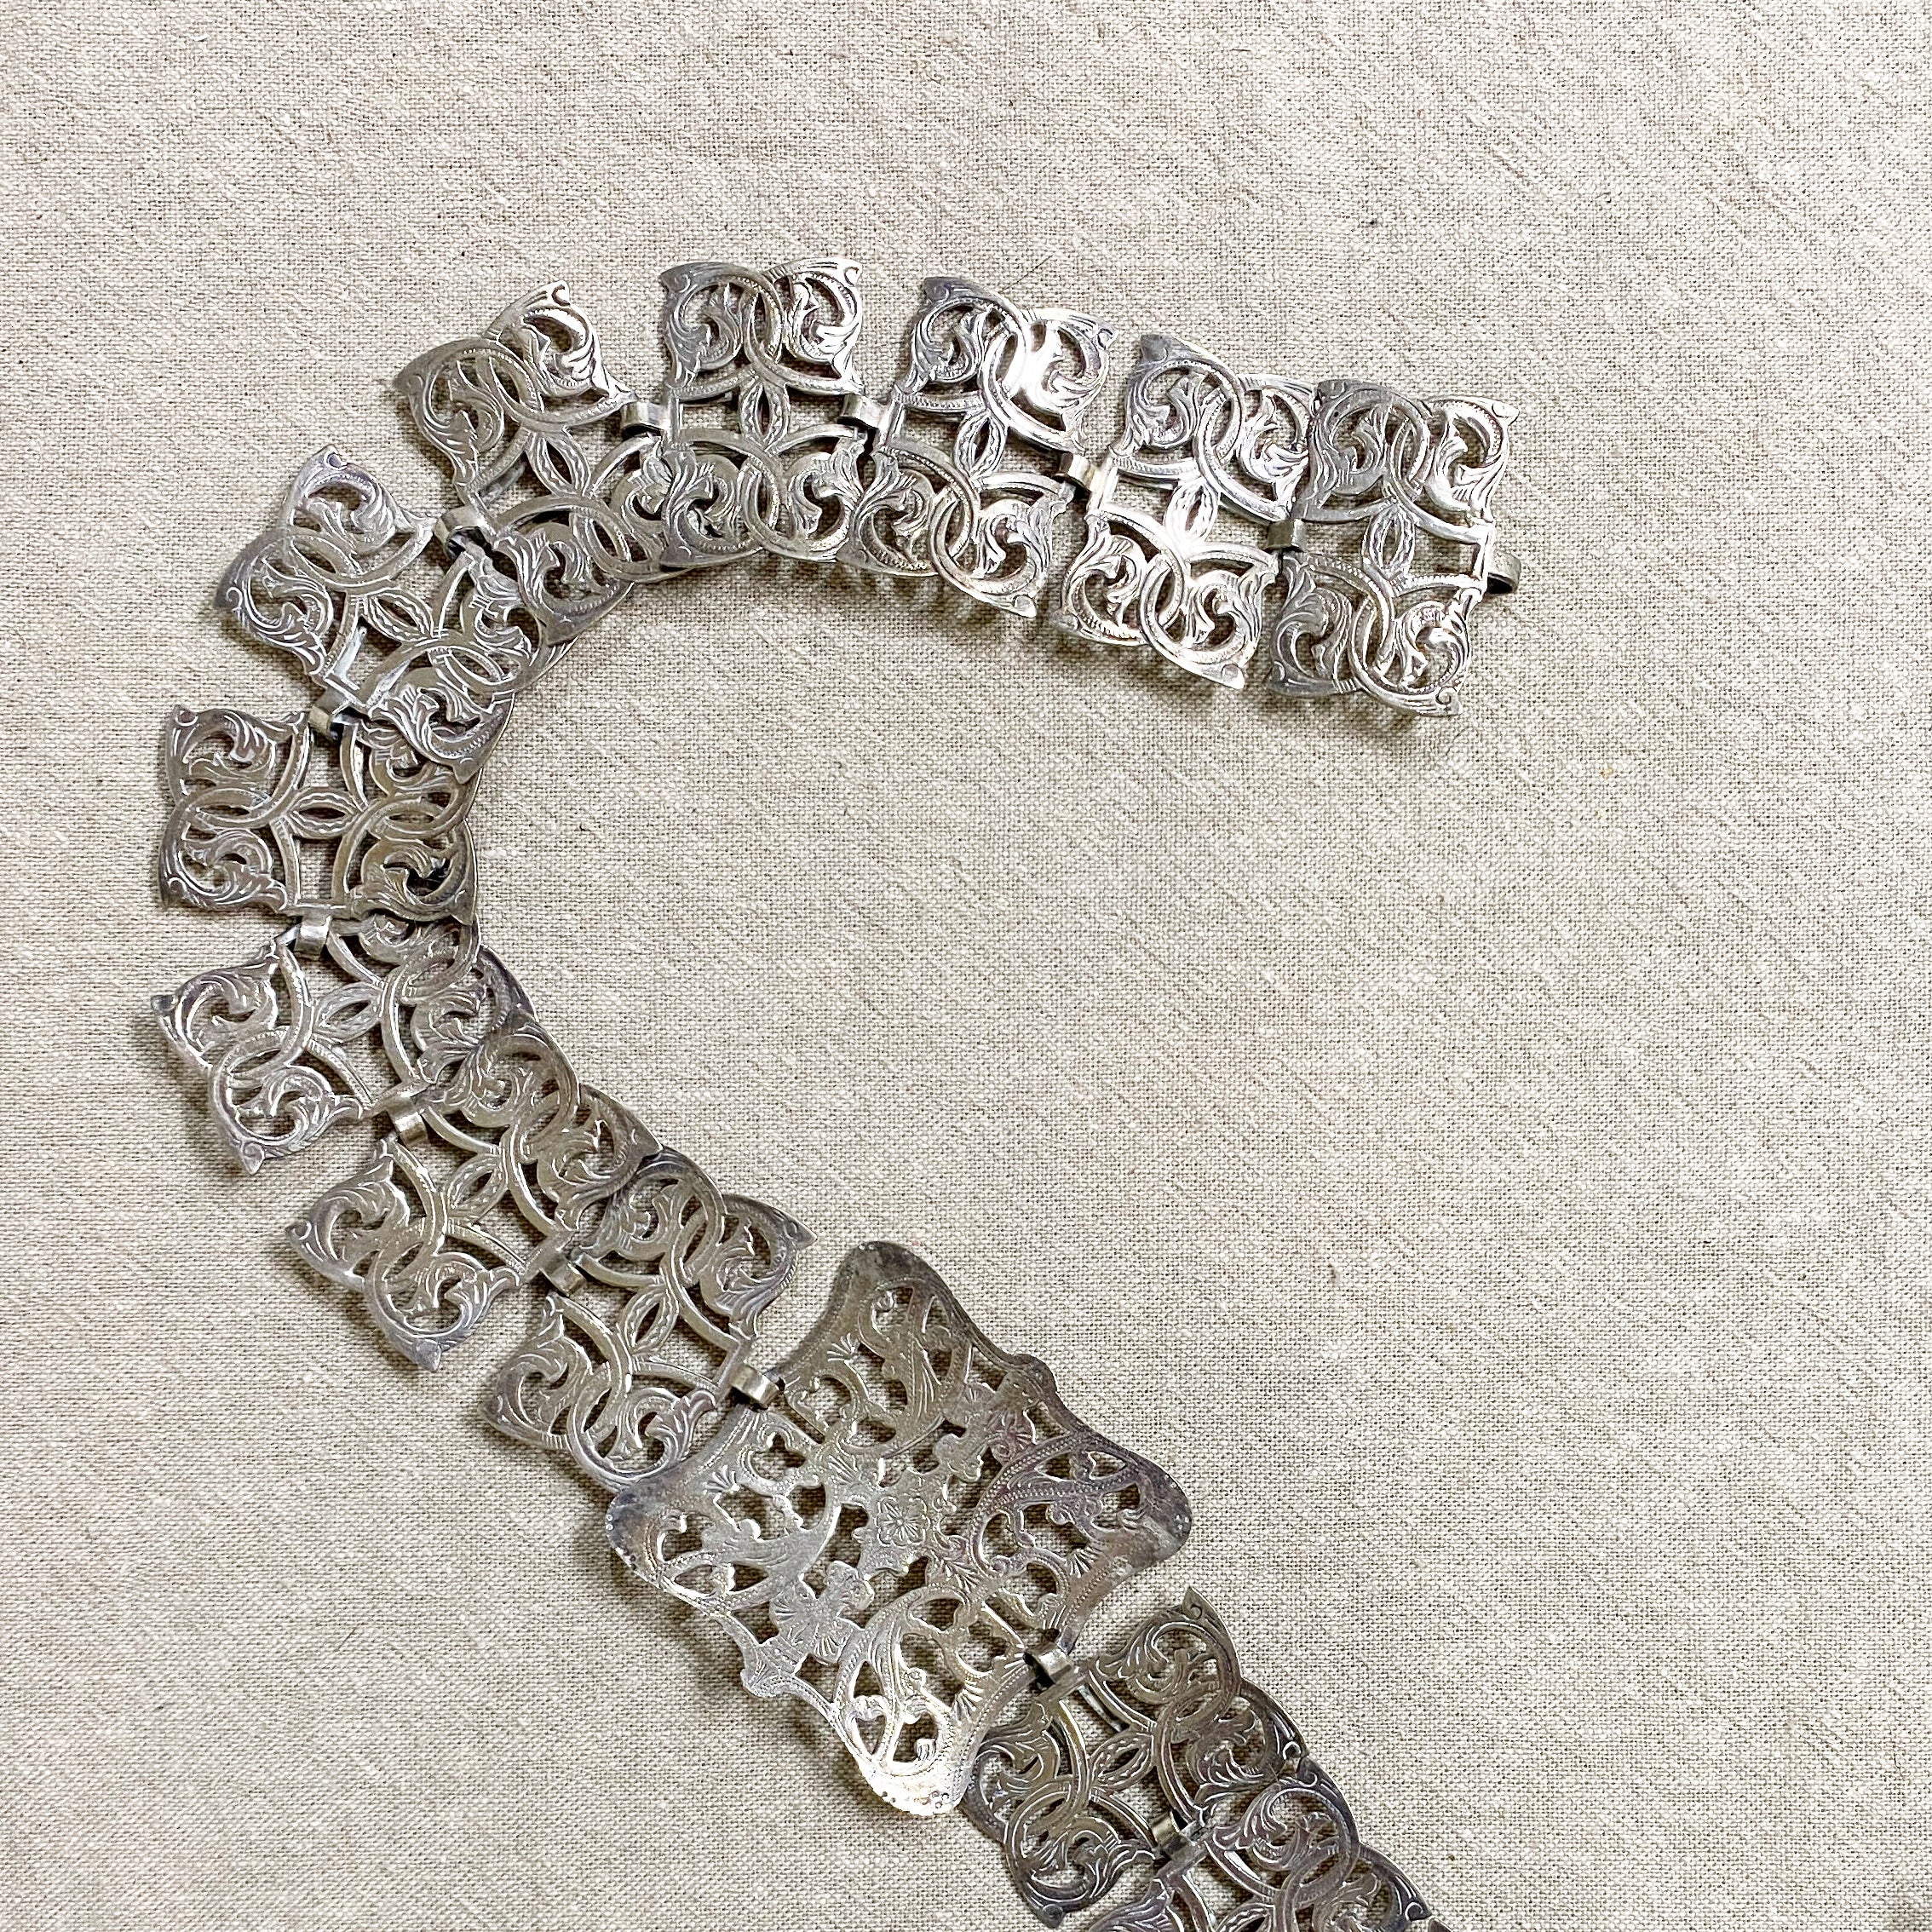 Detail of silver nurses belt